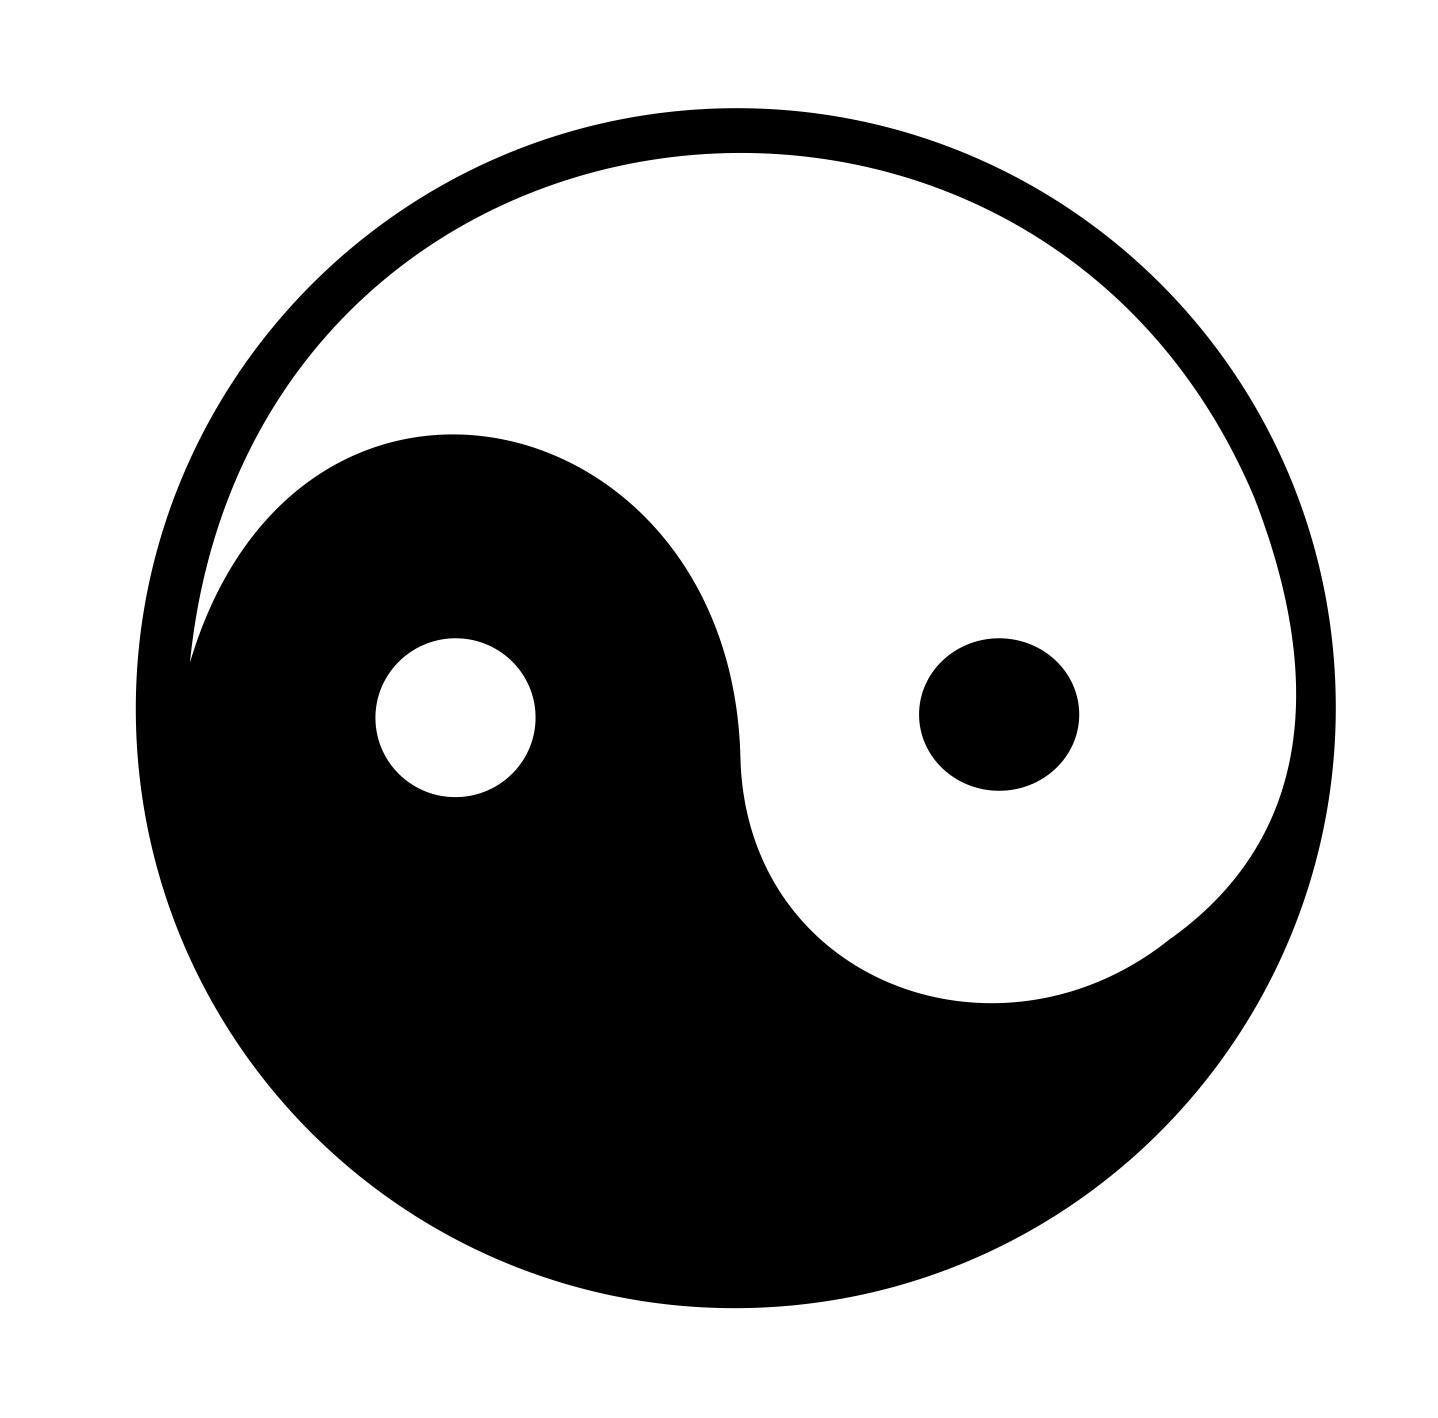 Yin Yang Black and White Box Logo - Ying Yang Chinese Symbols White Helmet Sticker Decal